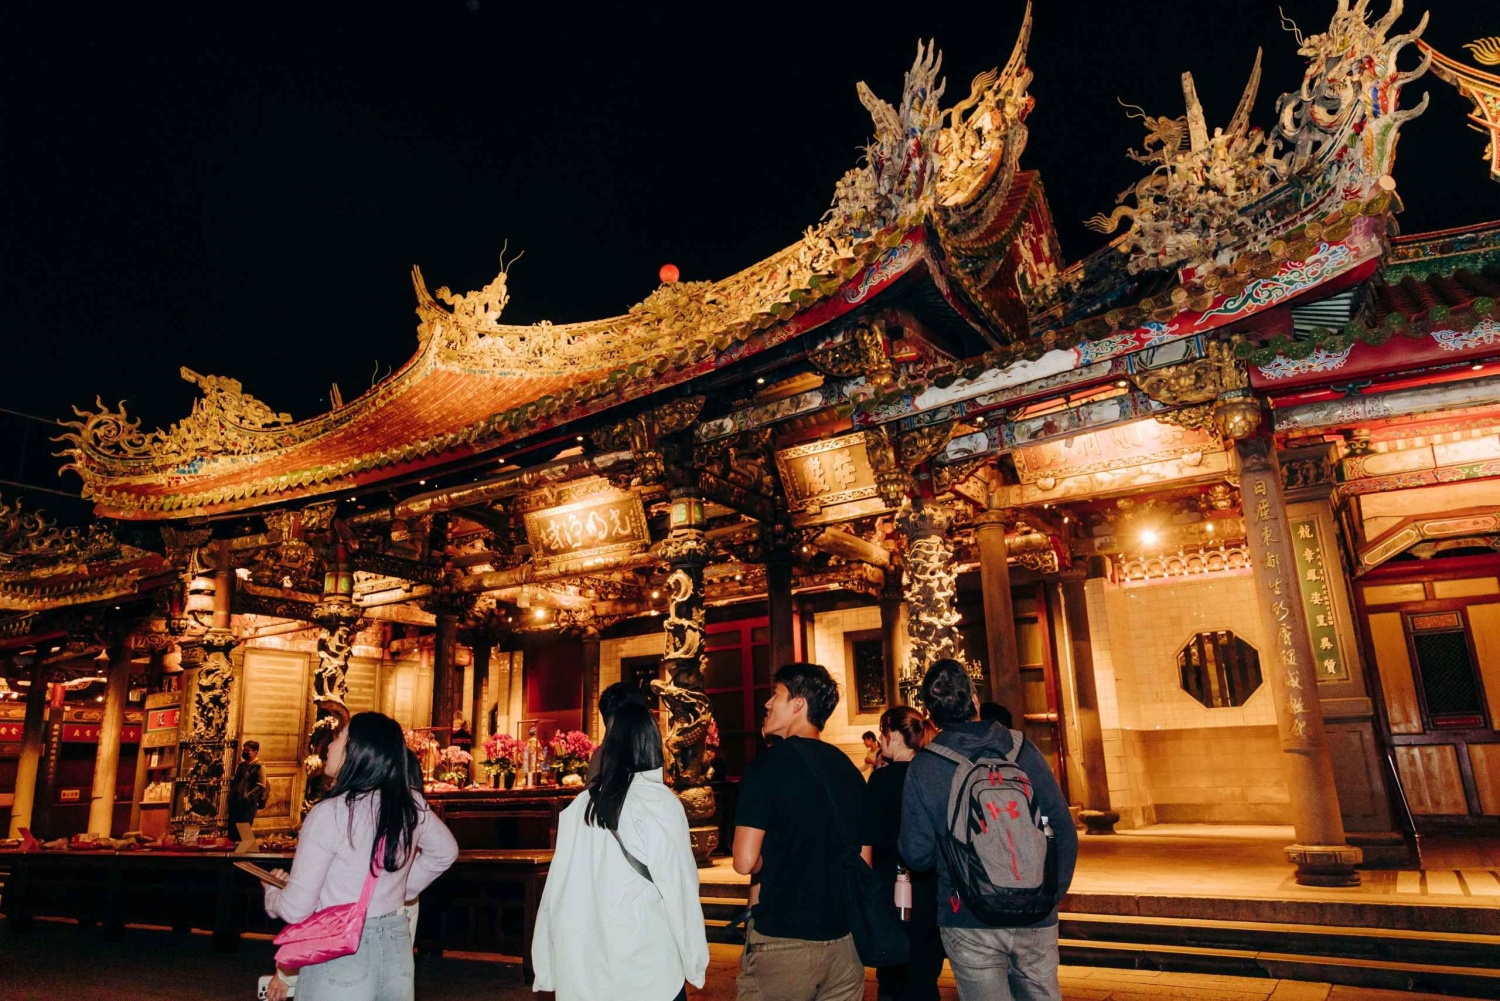 Le origini di Taipei e il Tempio di Longshan - Tour culturale di Taiwan